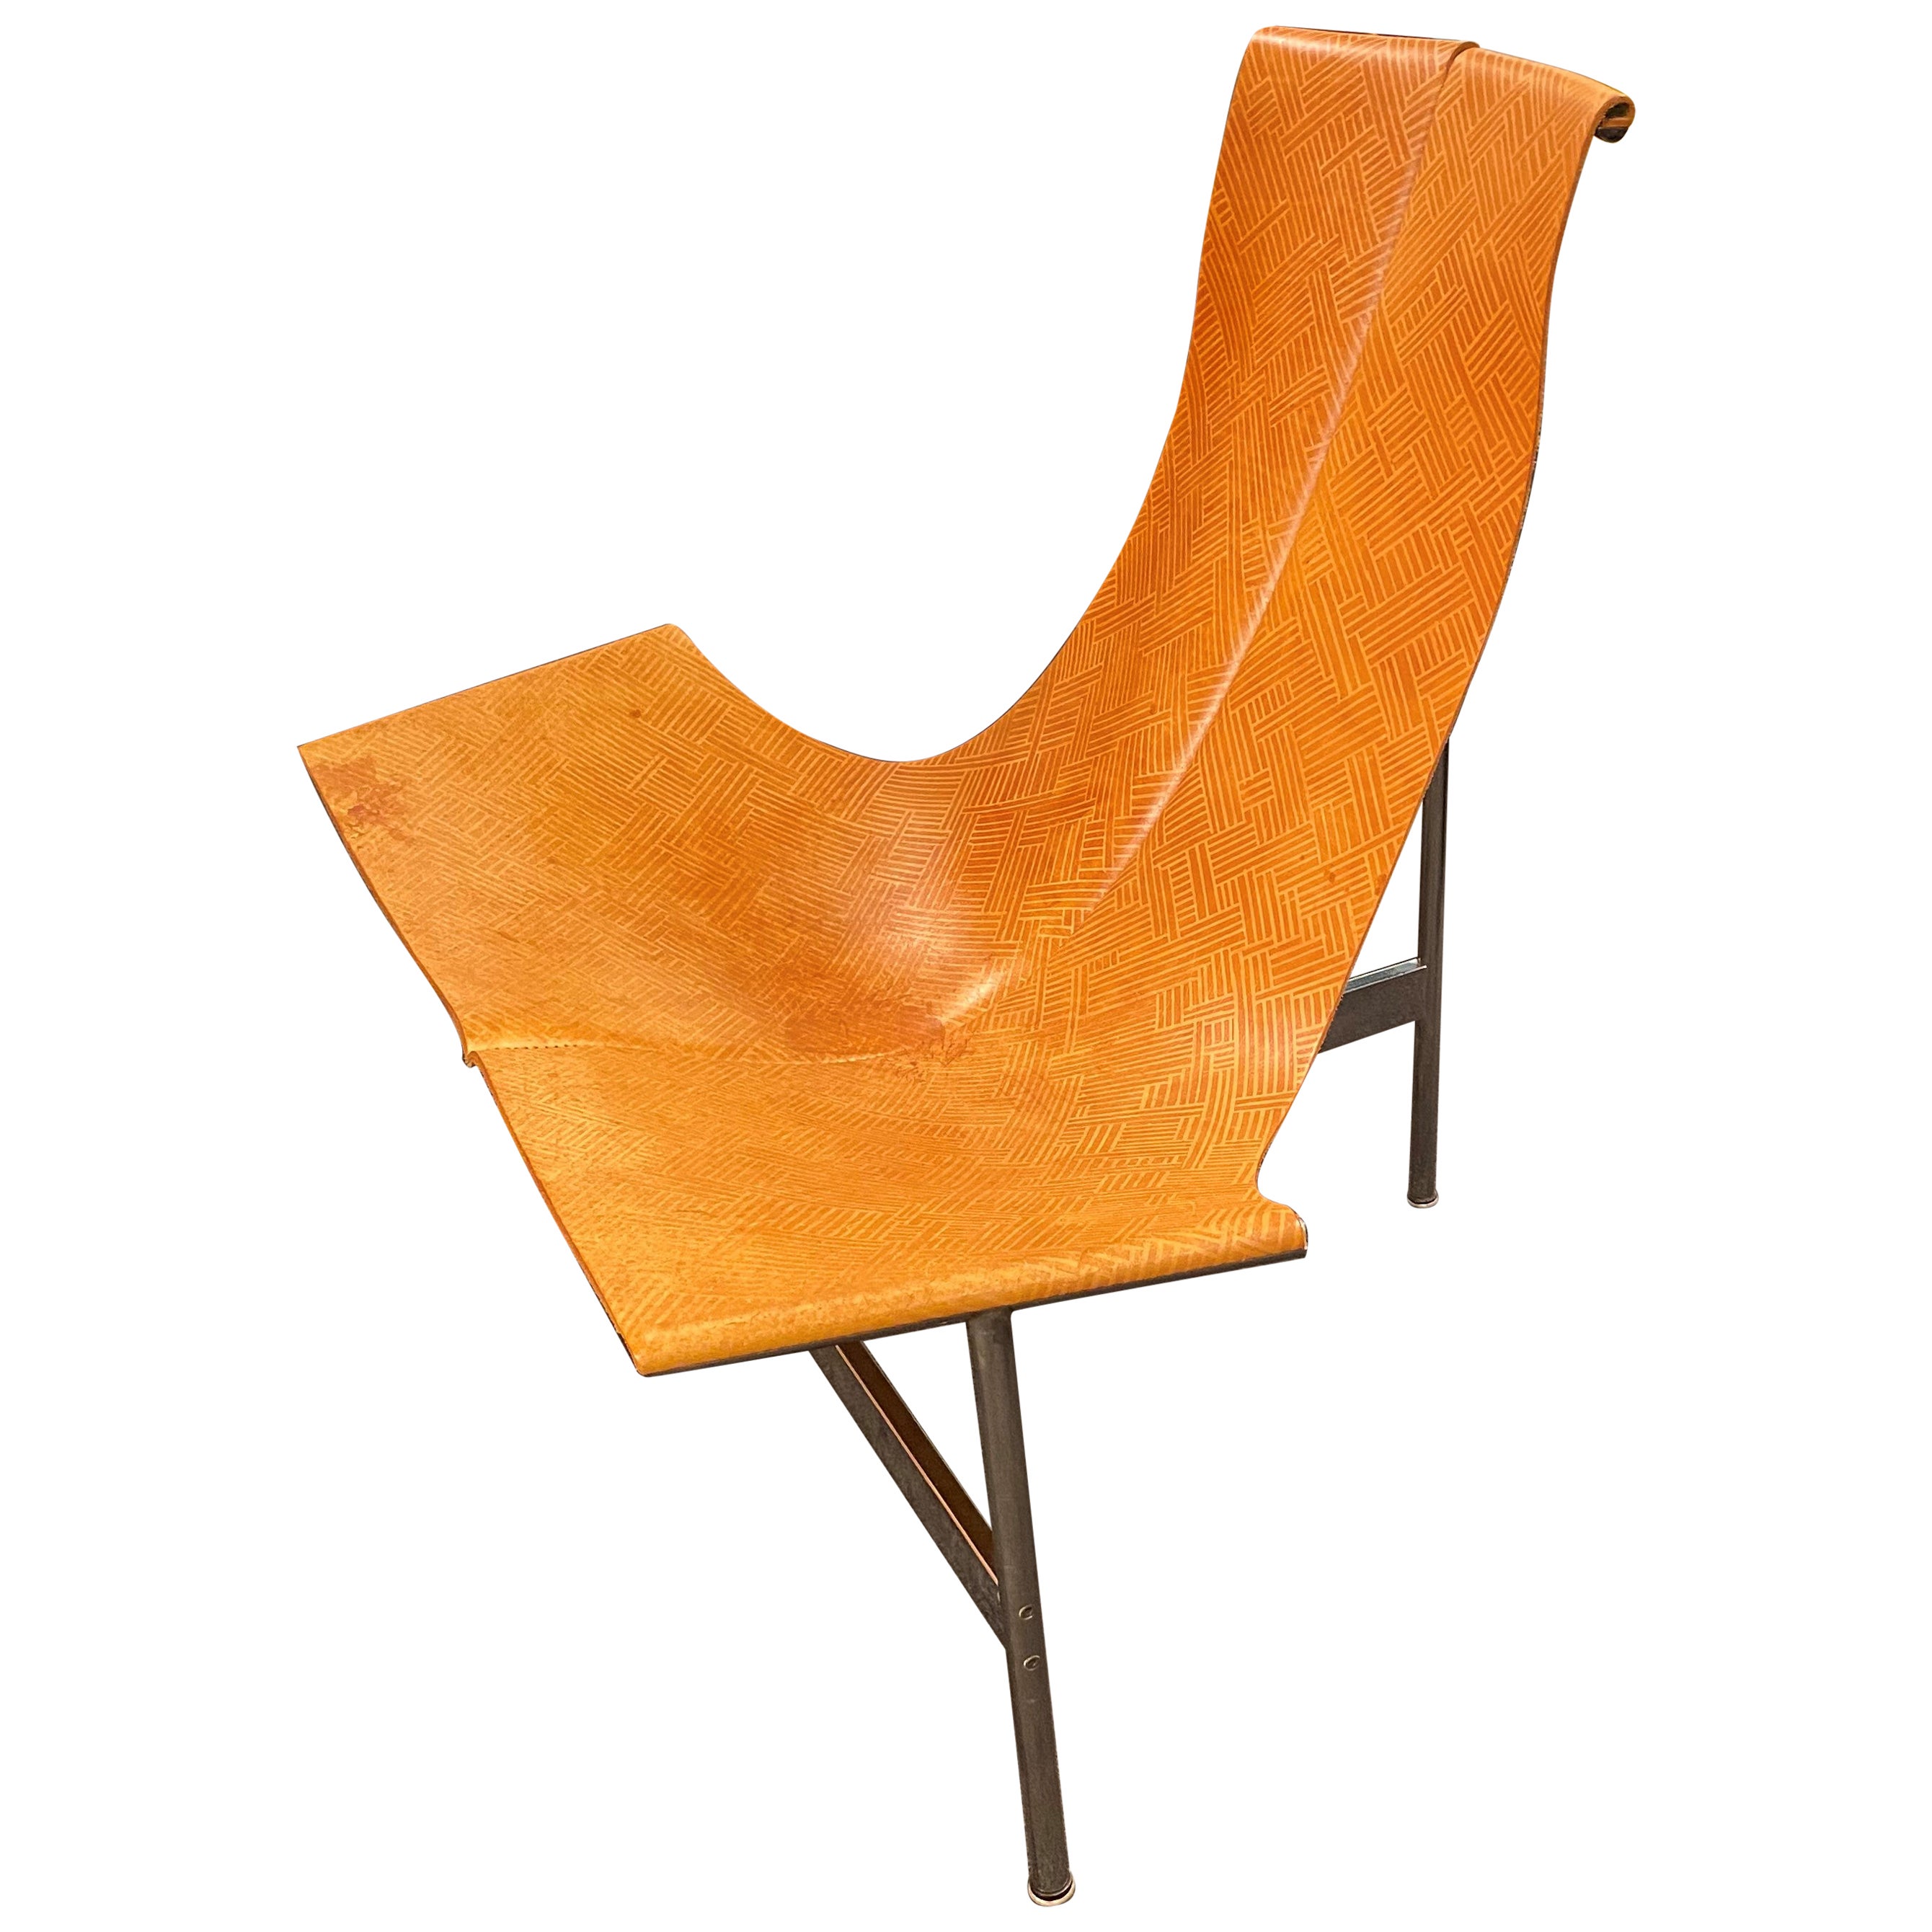 T-Chair by Katavolos, Littel & Kelley for Laverne Intl w/ Custom Leather by AVO